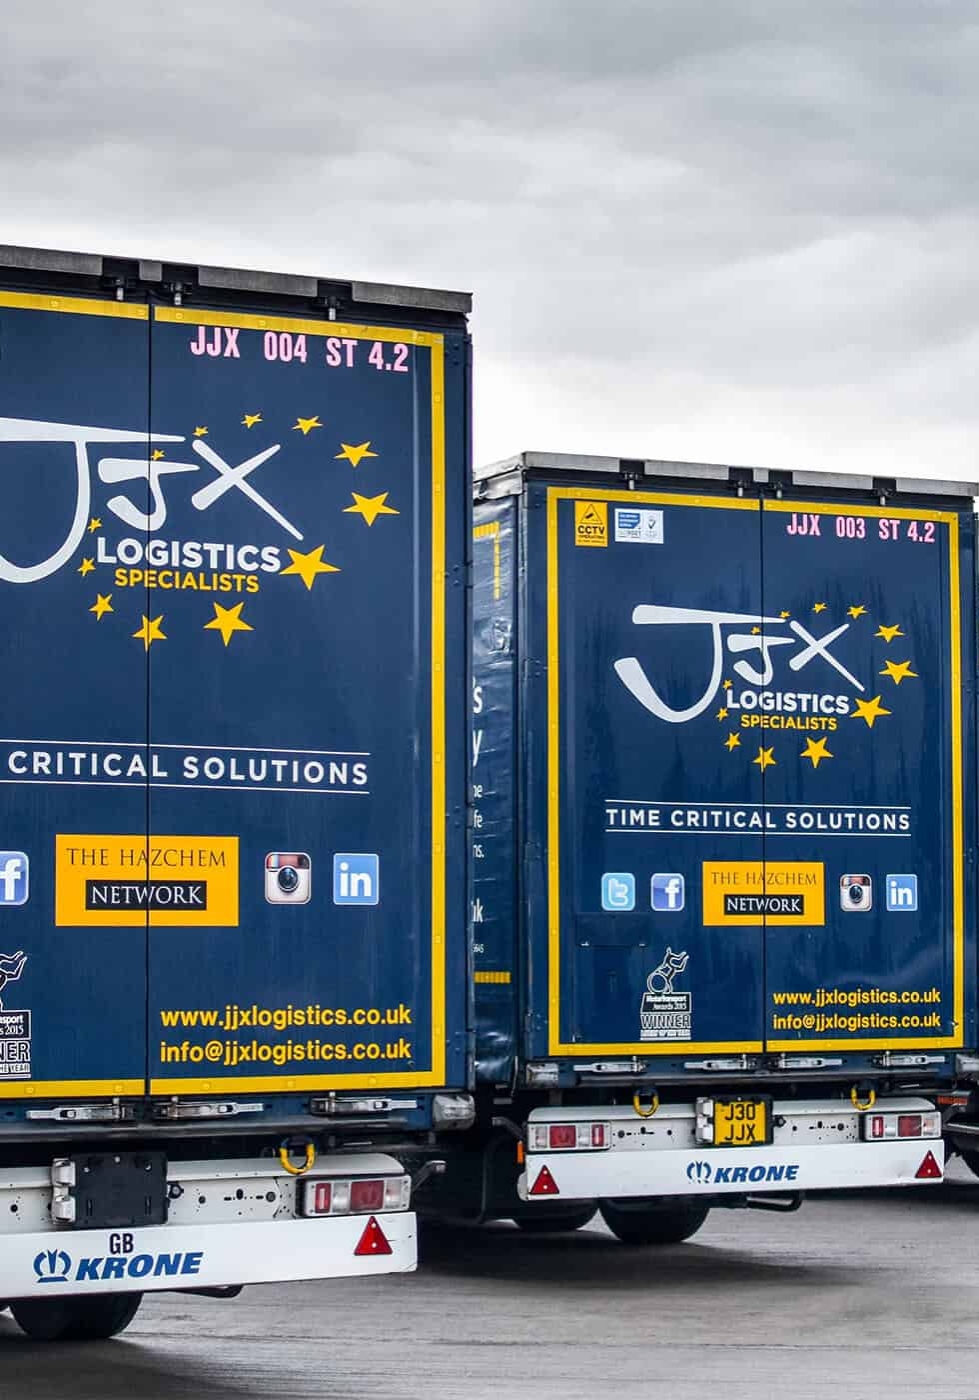 JJX Logistics Finalist at Express and Stars Business Awards